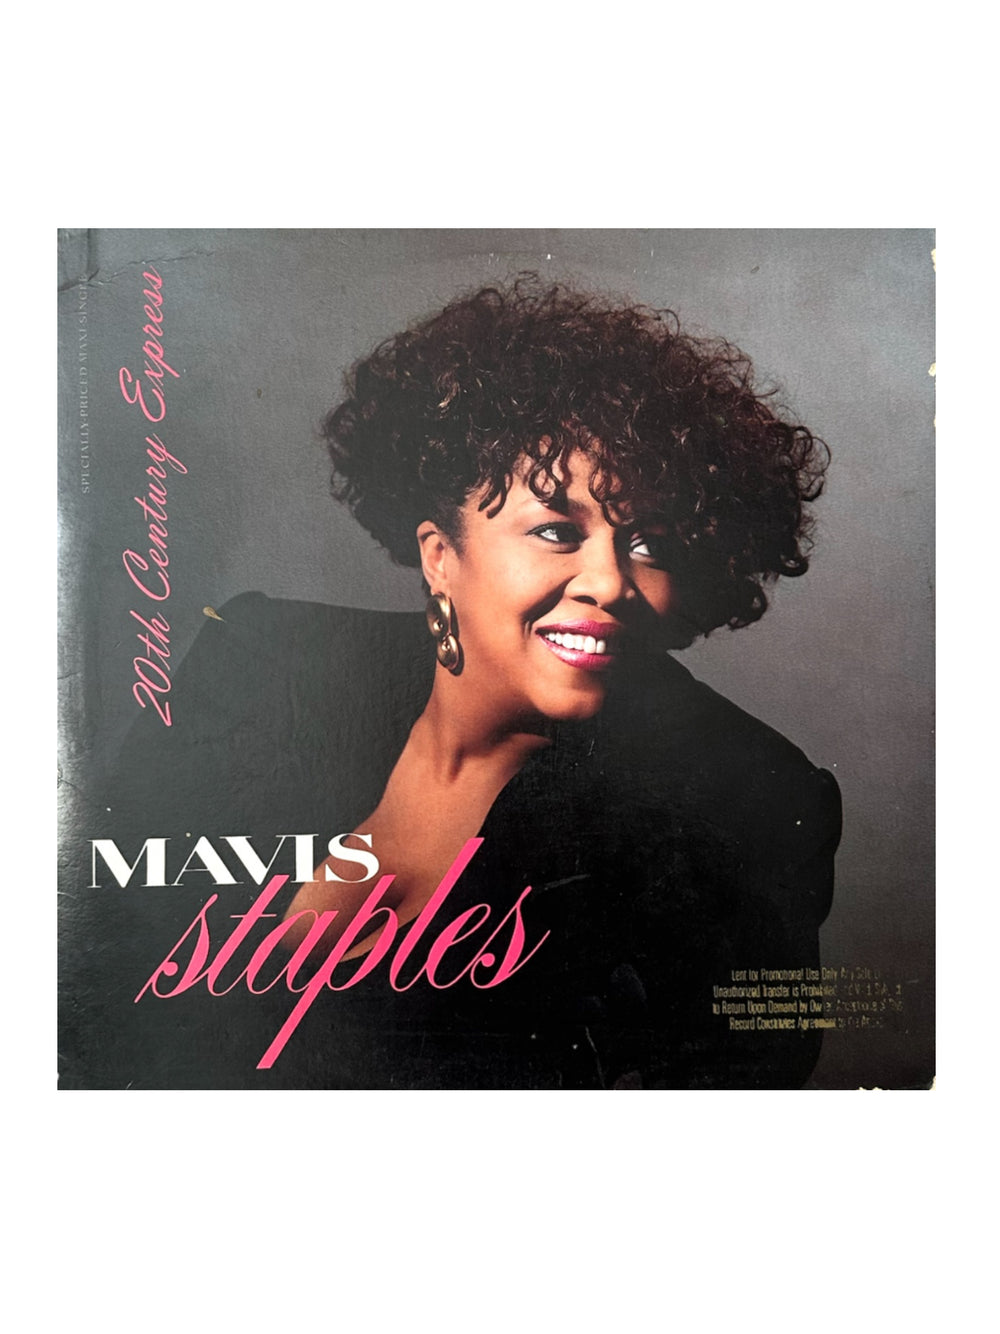 Prince – Mavis Staples 20th Century Express Vinyl 12" Maxi-Single US Preloved: 1989